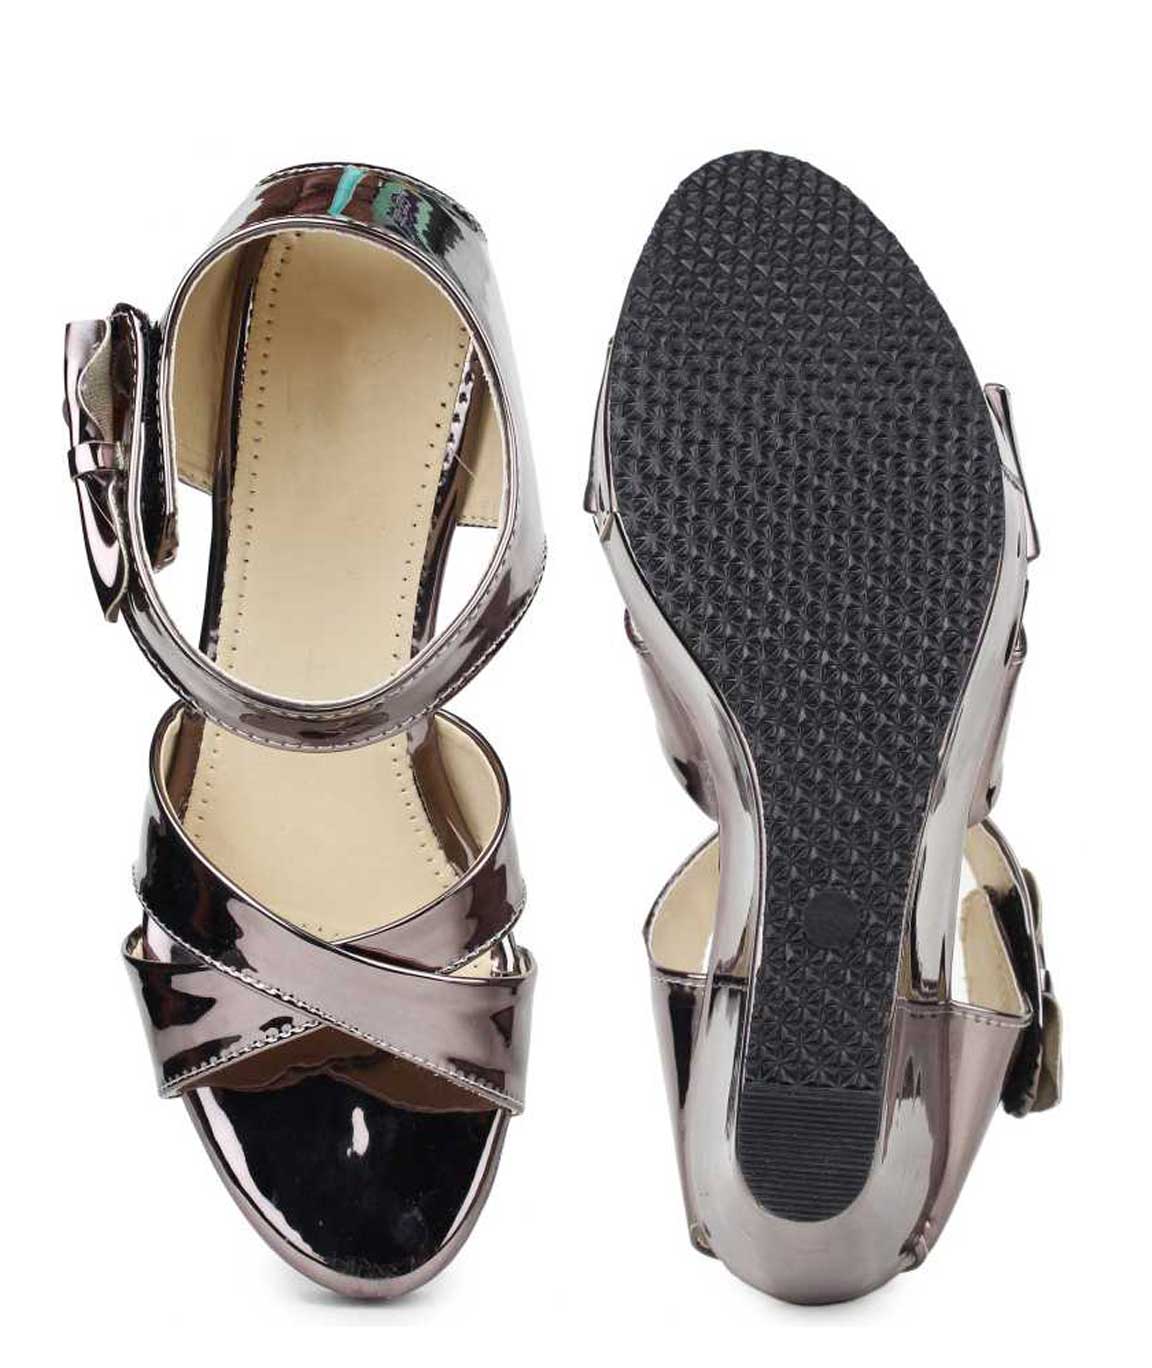 Buy Racecourse Women's Tiic Fashion Sandal Heel Barmish - (Copper, 3) at  Amazon.in